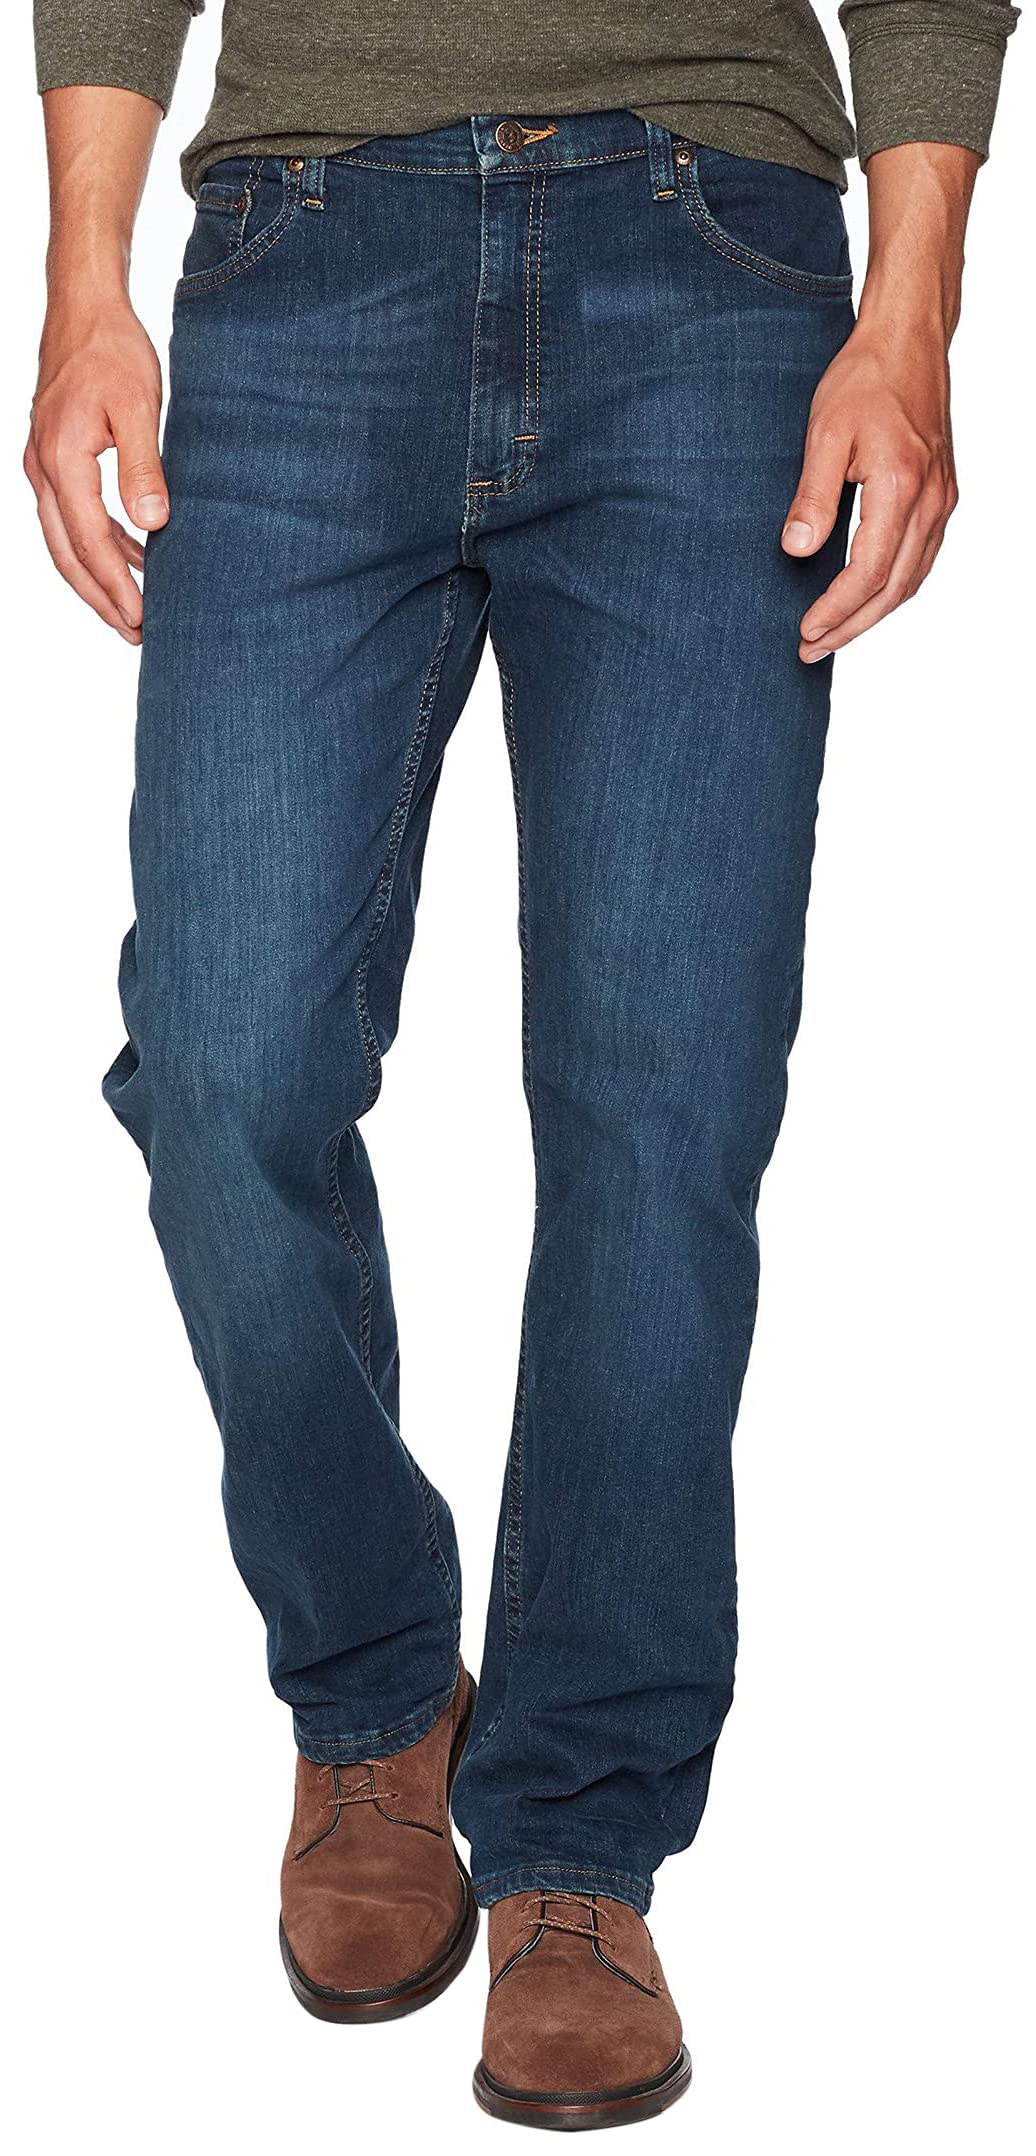 Wrangler Authentics Men's Classic 5-Pocket Regular Fit Jean, Twilight Flex, 34W x 36L